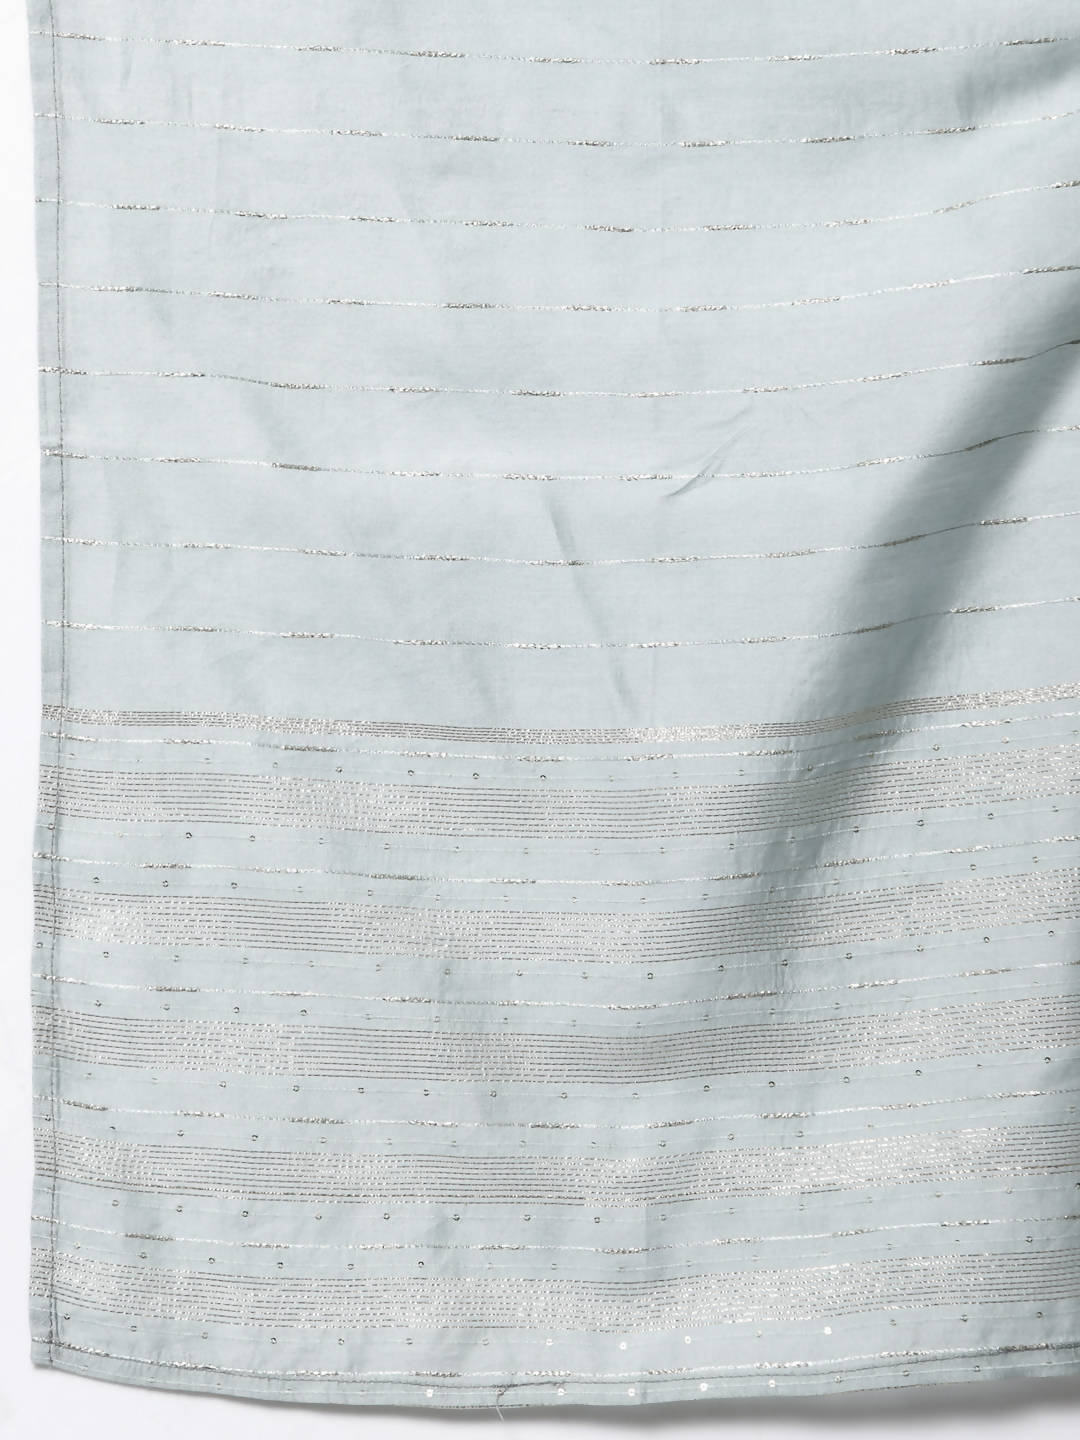 Myshka Grey Silk Blend Embroidered 3/4 Sleeve Round Neck Kurta Pant Dupatta Set